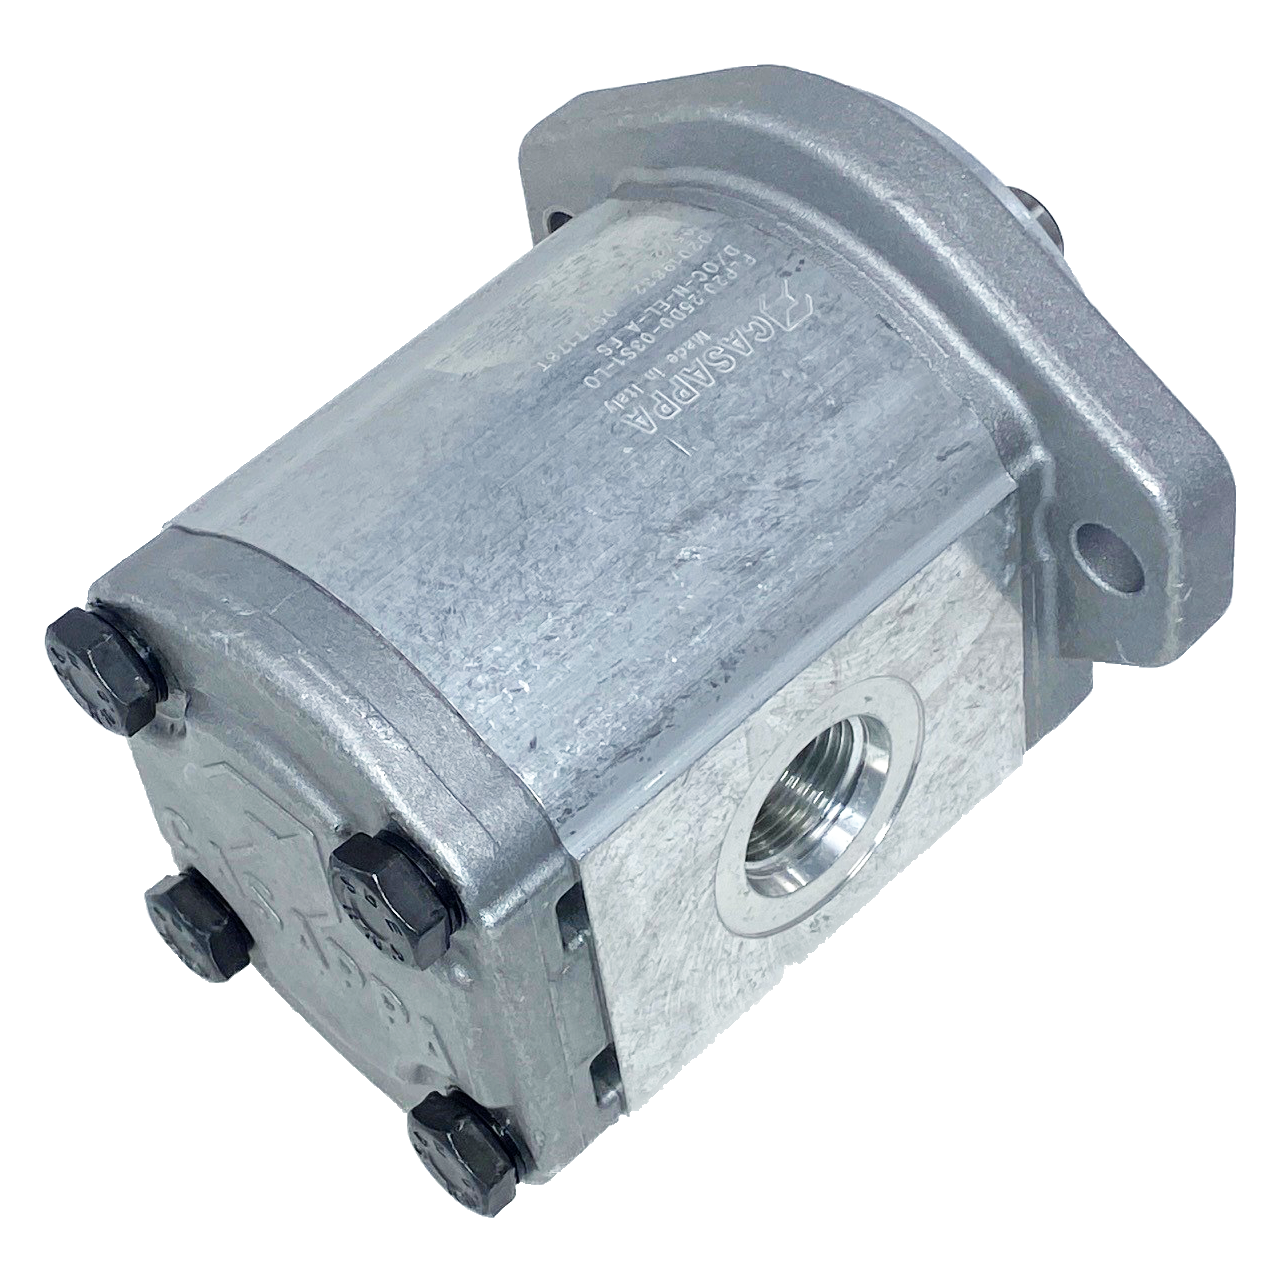 PLM20.31,5R0-31S1-LOC/OD-N-EL : Casappa Polaris Gear Motor, 33.03cc, 1885psi Rated, 2465RPM, Reversible Rear External Drain, 5/8" Bore x 5/32" Key Shaft, SAE A 2-Bolt Flange, 0.625 (5/8") #10 SAE Inlet, 0.75 (3/4") #12 SAE Outlet, Aluminum Body & Flange